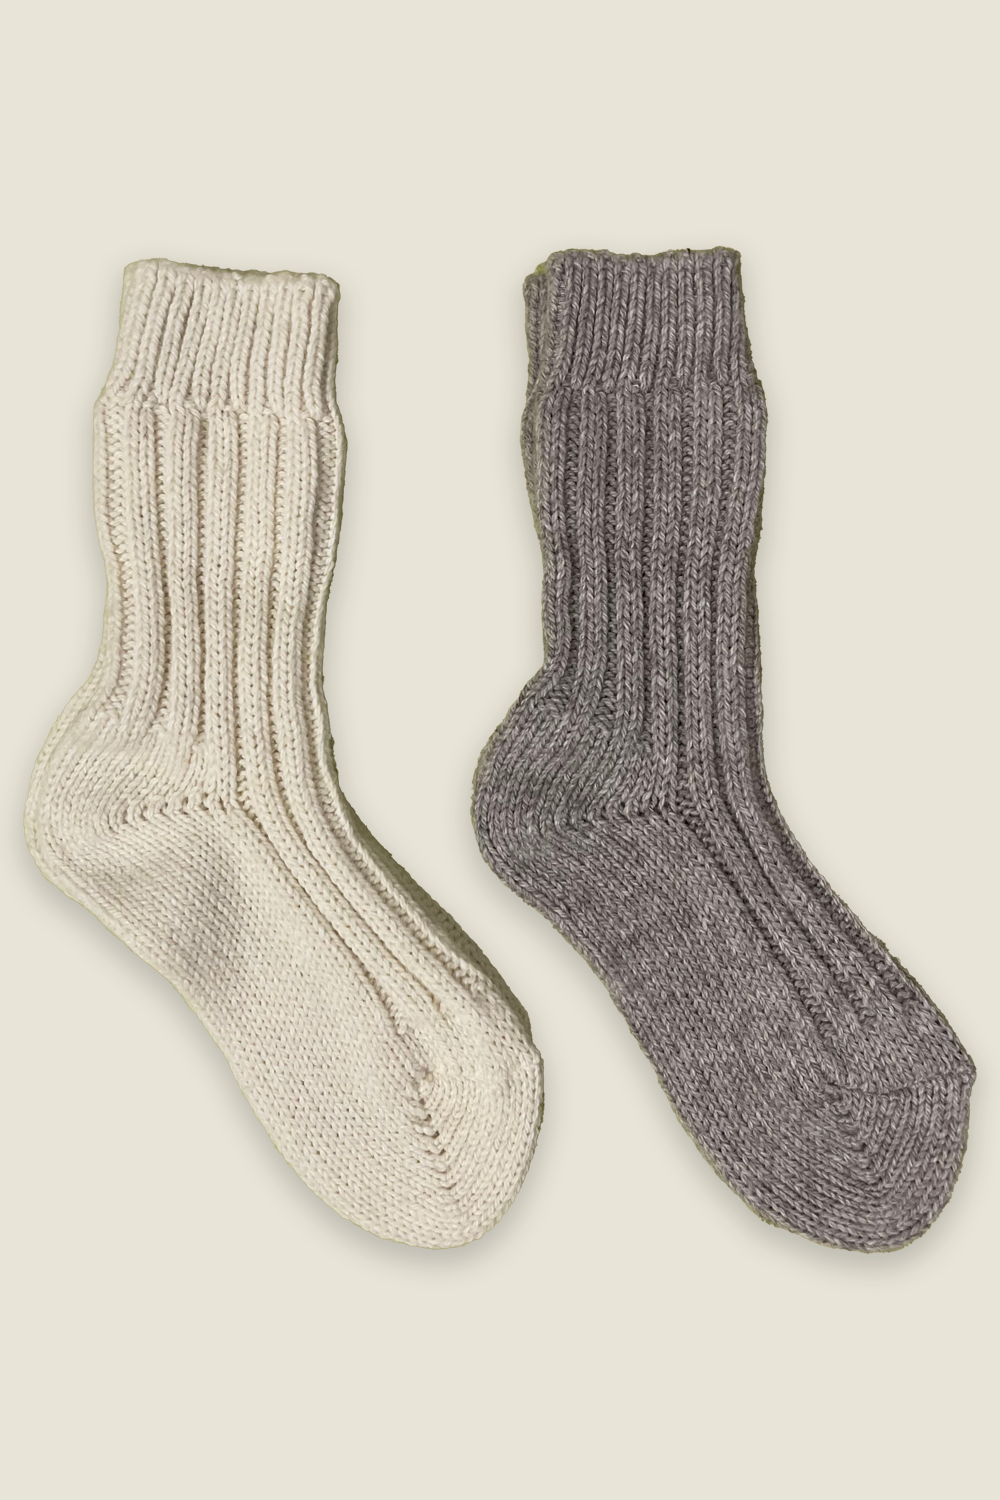 Alpaca Socks - natural and grey - 2 pairs